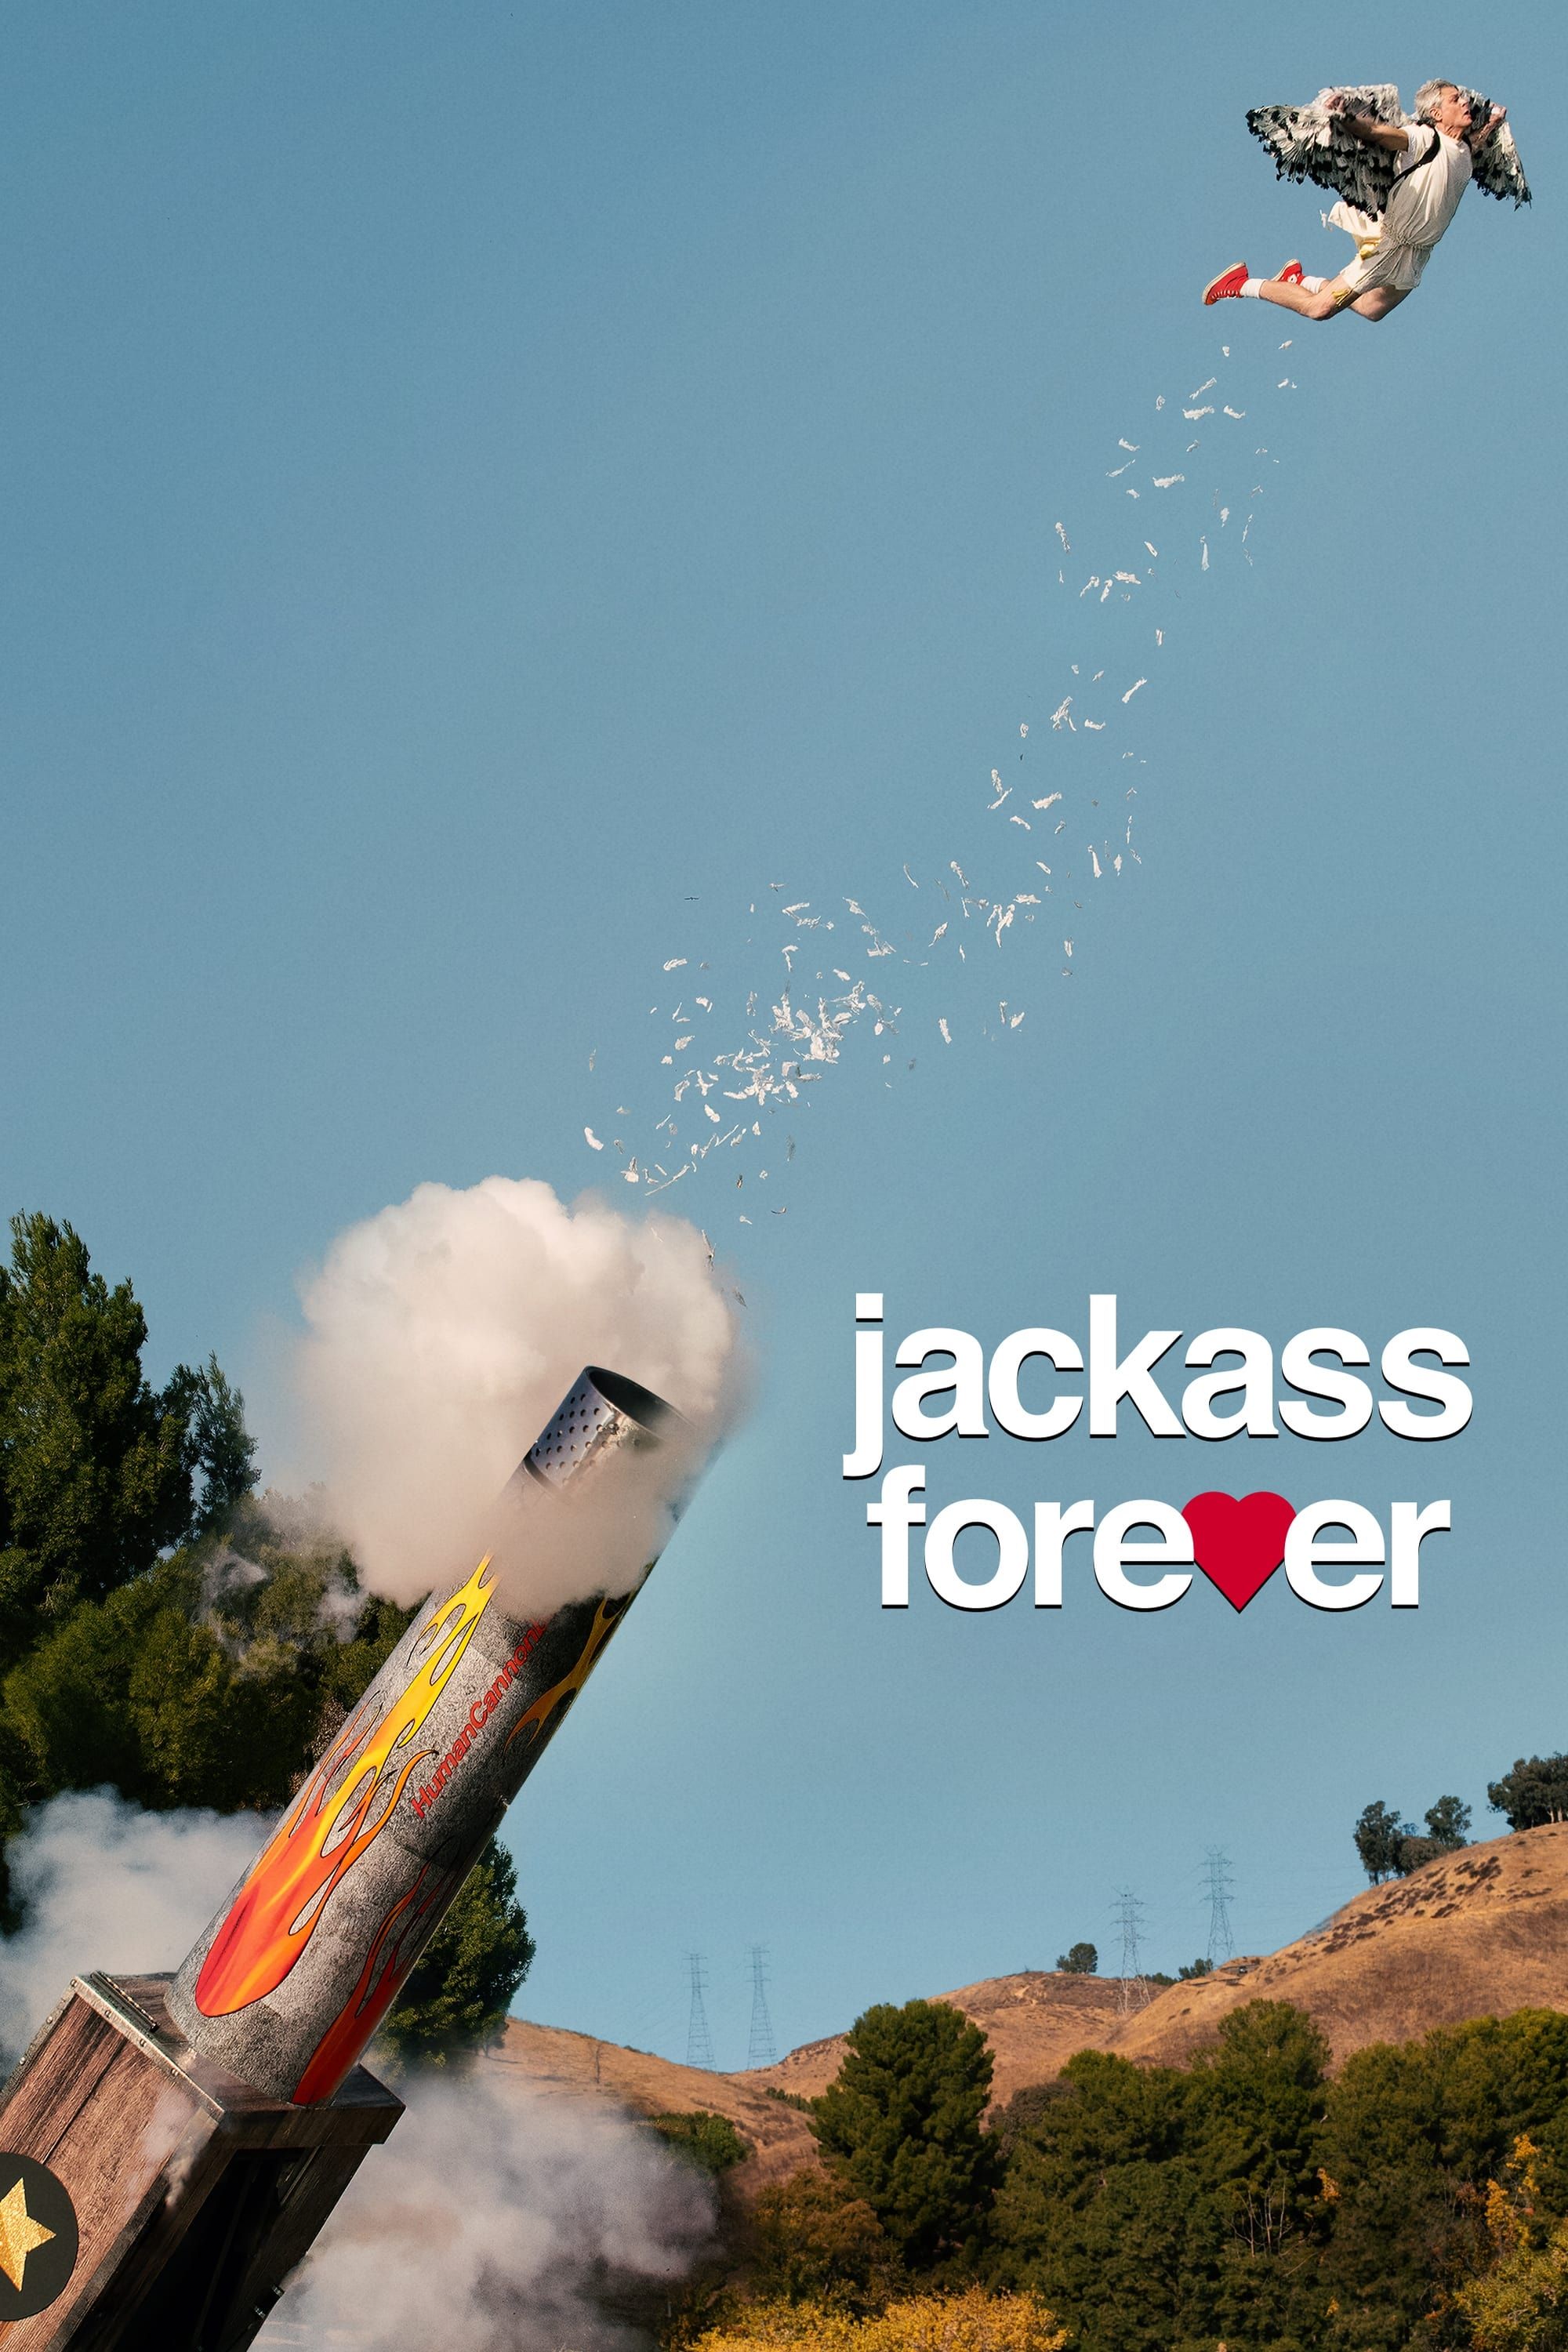 Bam Margera settles legal dispute over dismissal from Jackass Forever film